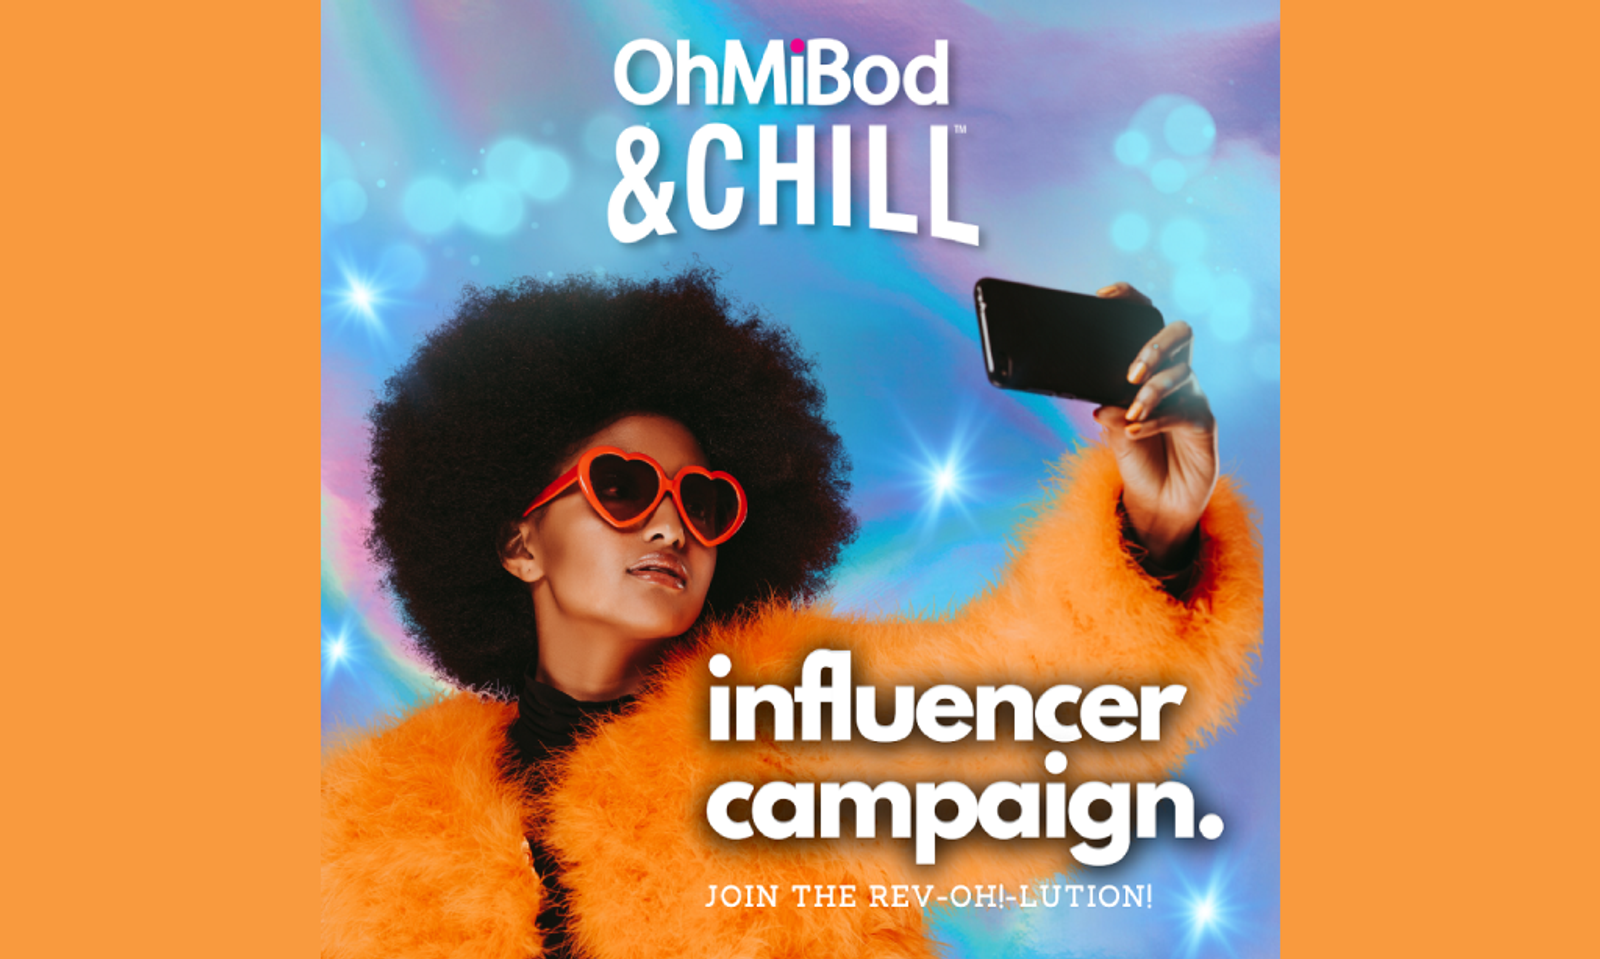 OhMiBod Announces New Influencer Campaign